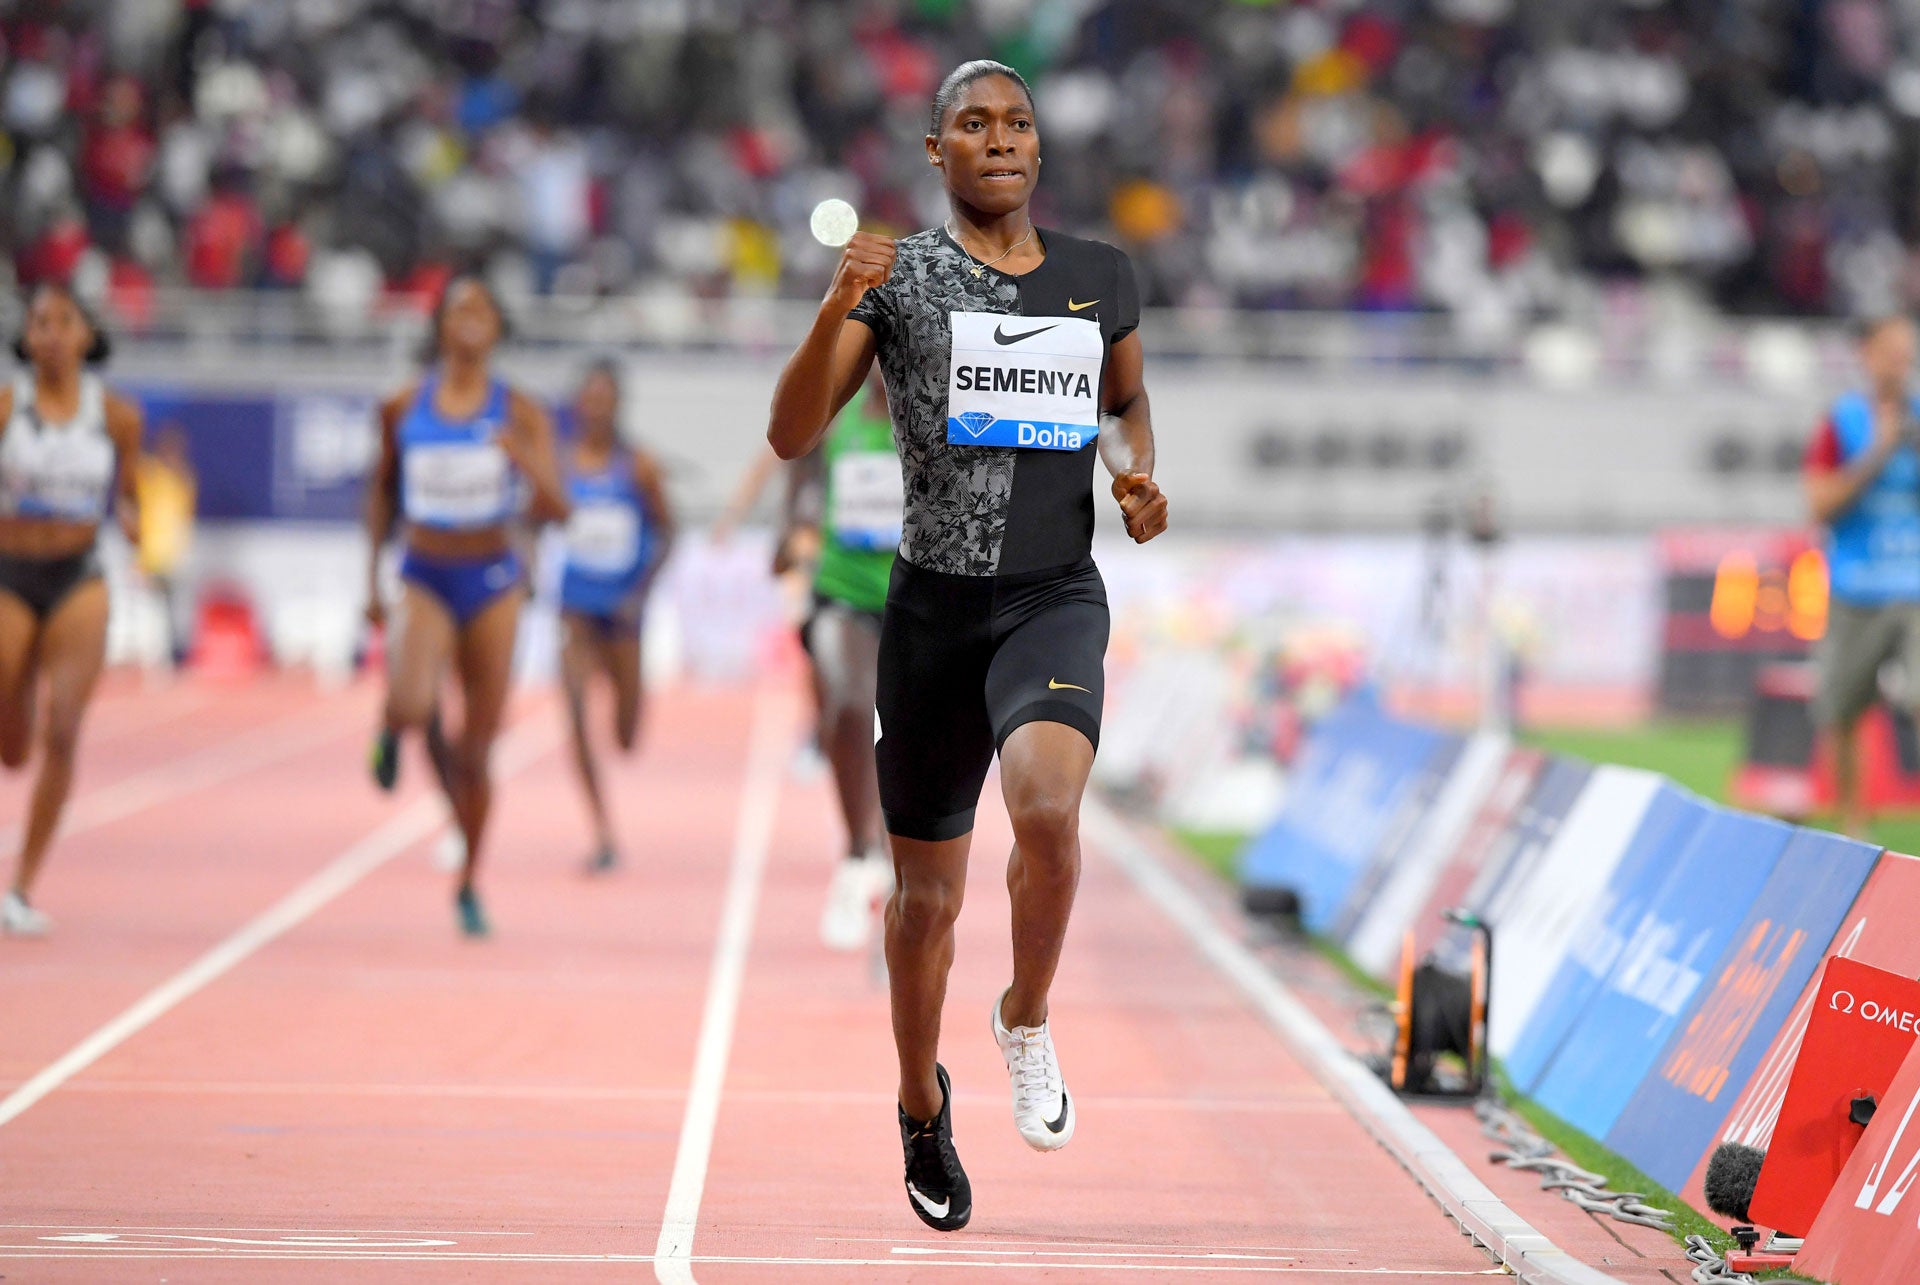 Caster Semnya wins the women's 800m during the IAAF Doha Diamond League 2019 at Khalifa International Stadium in Doha, Qatar, May 3, 2019.